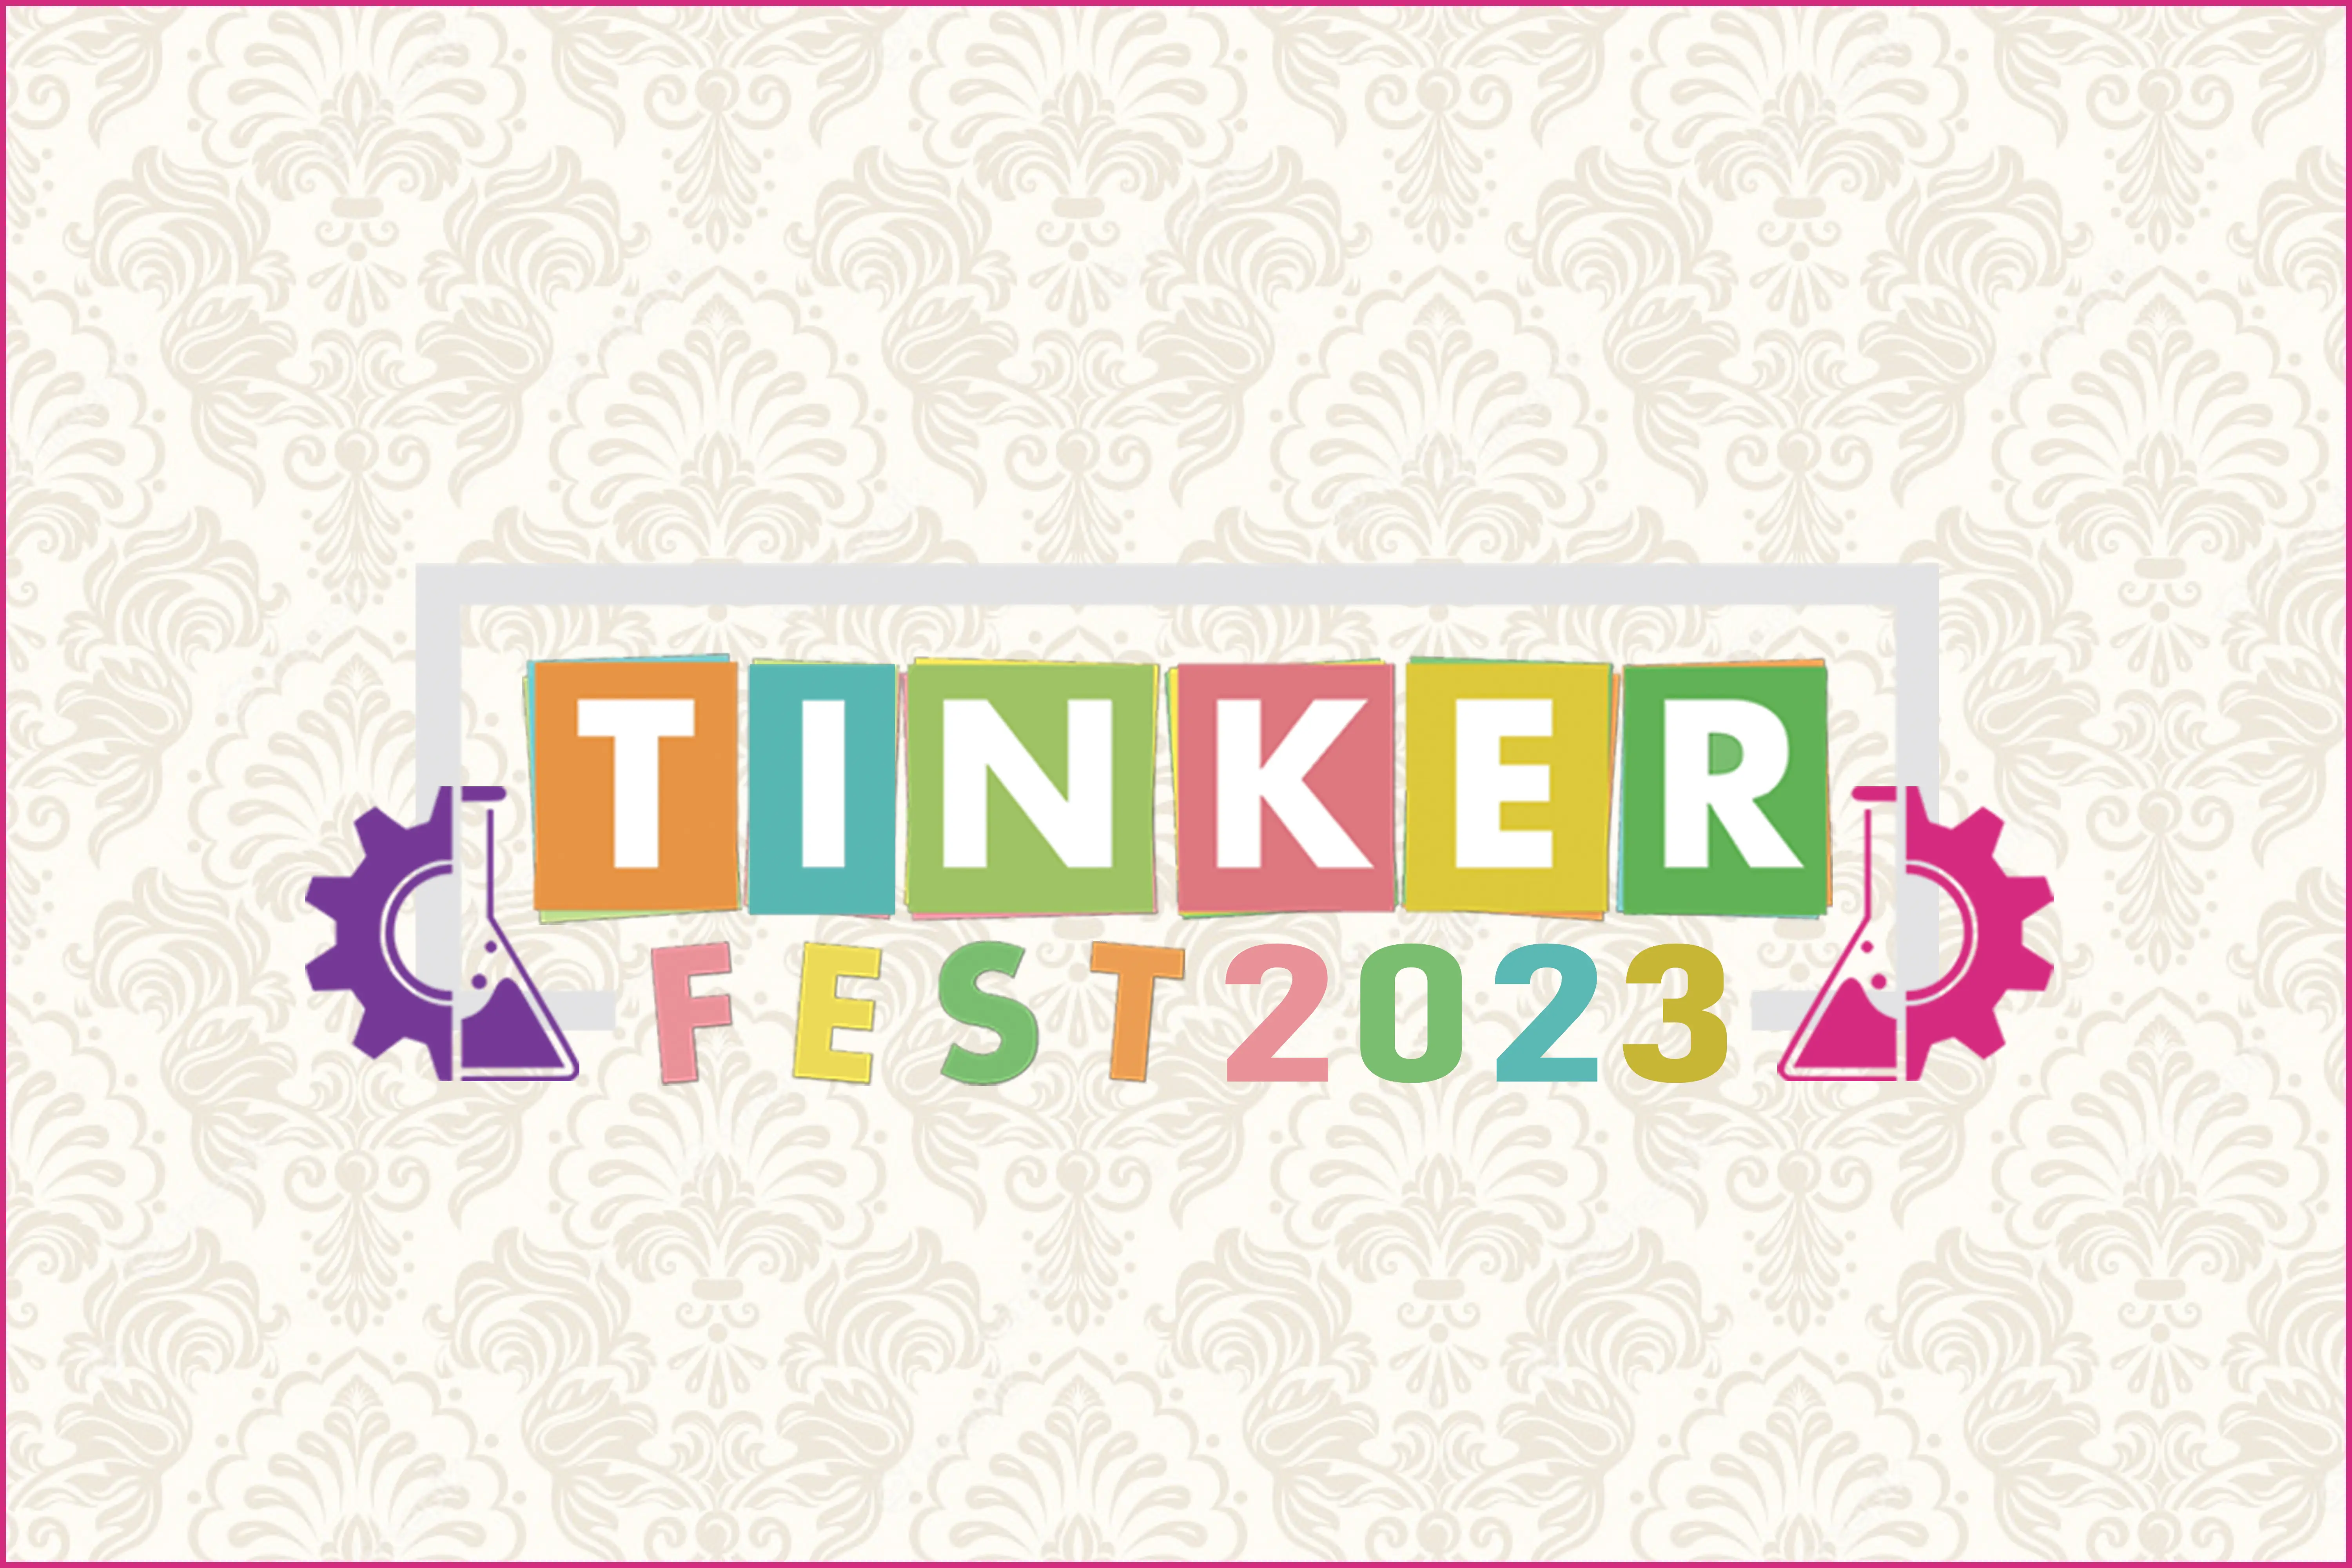 TINKERFEST 2023 at Bannari Amman Vidya Niketan Matriculation Higher Secondary School Sathyamangalam